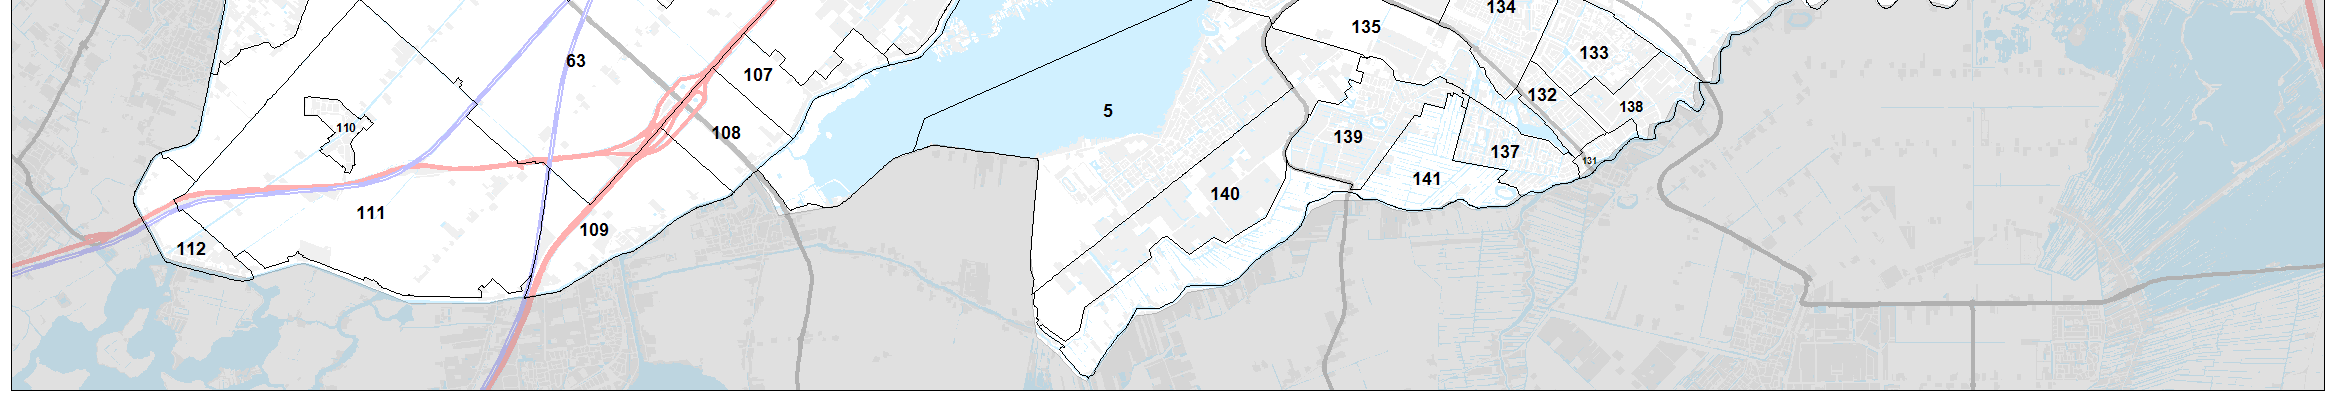 Bijlage 3 Overzicht Woon- en Werkgebieden in 2015.